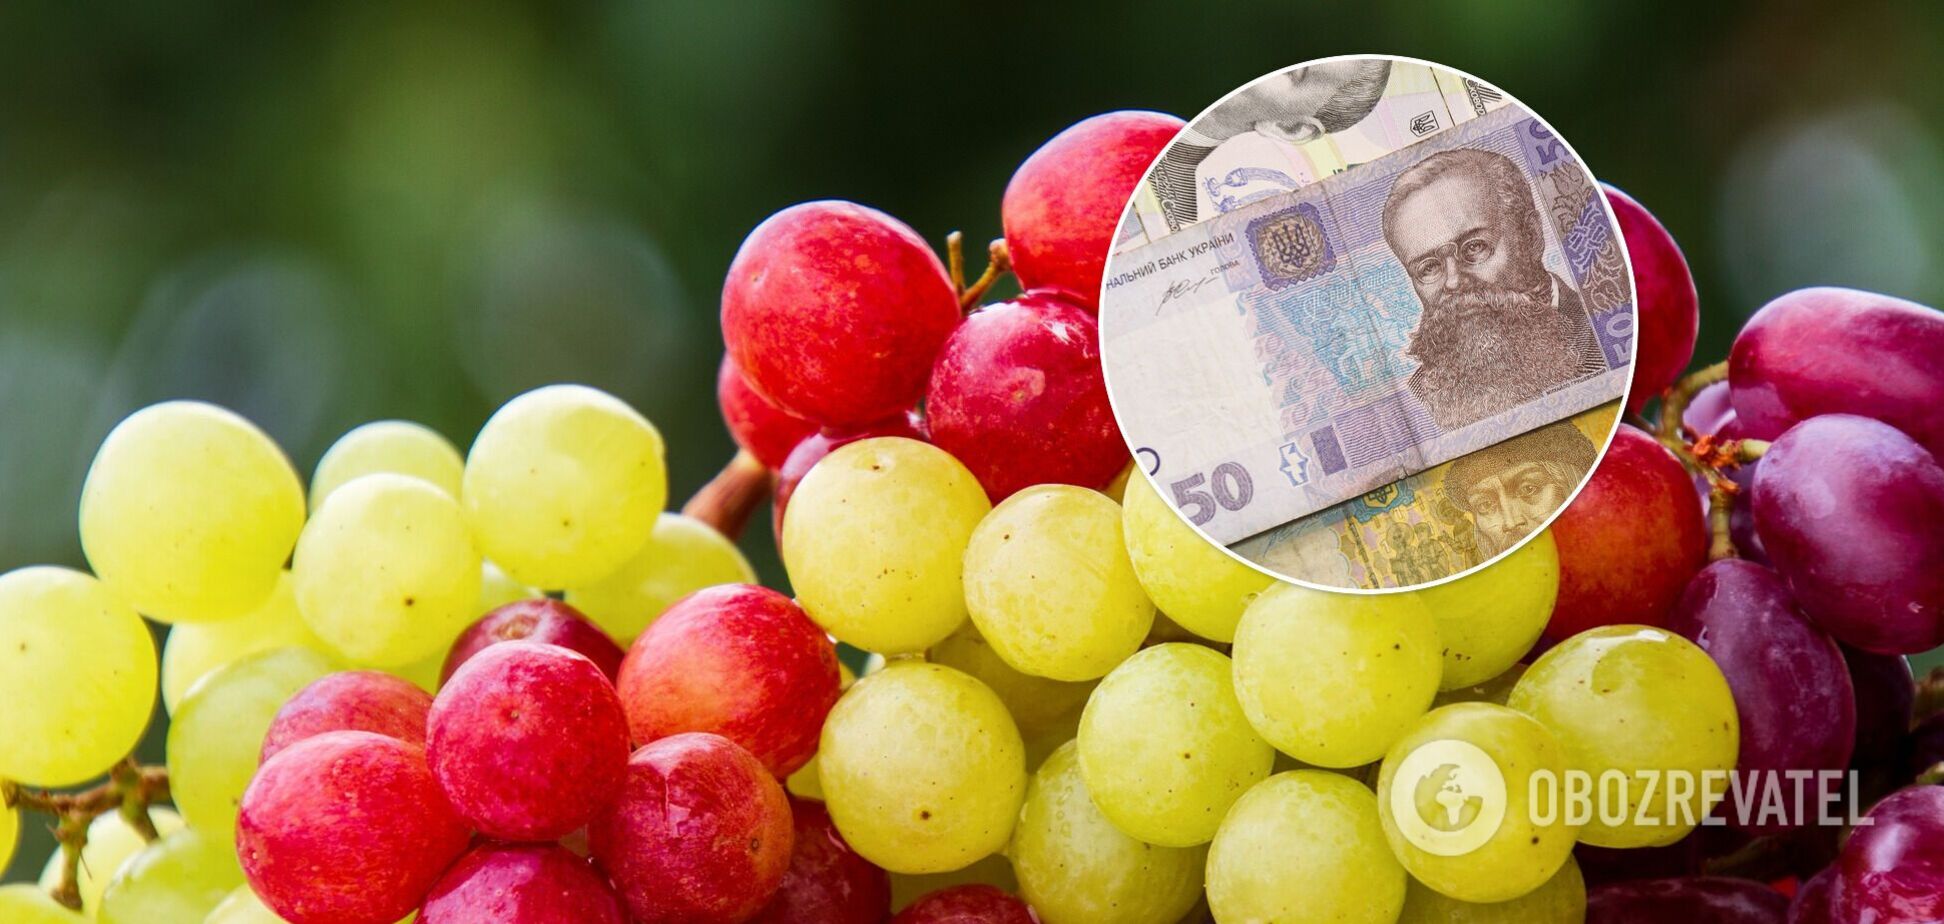 Непогода взвинтила цену винограда на 15%